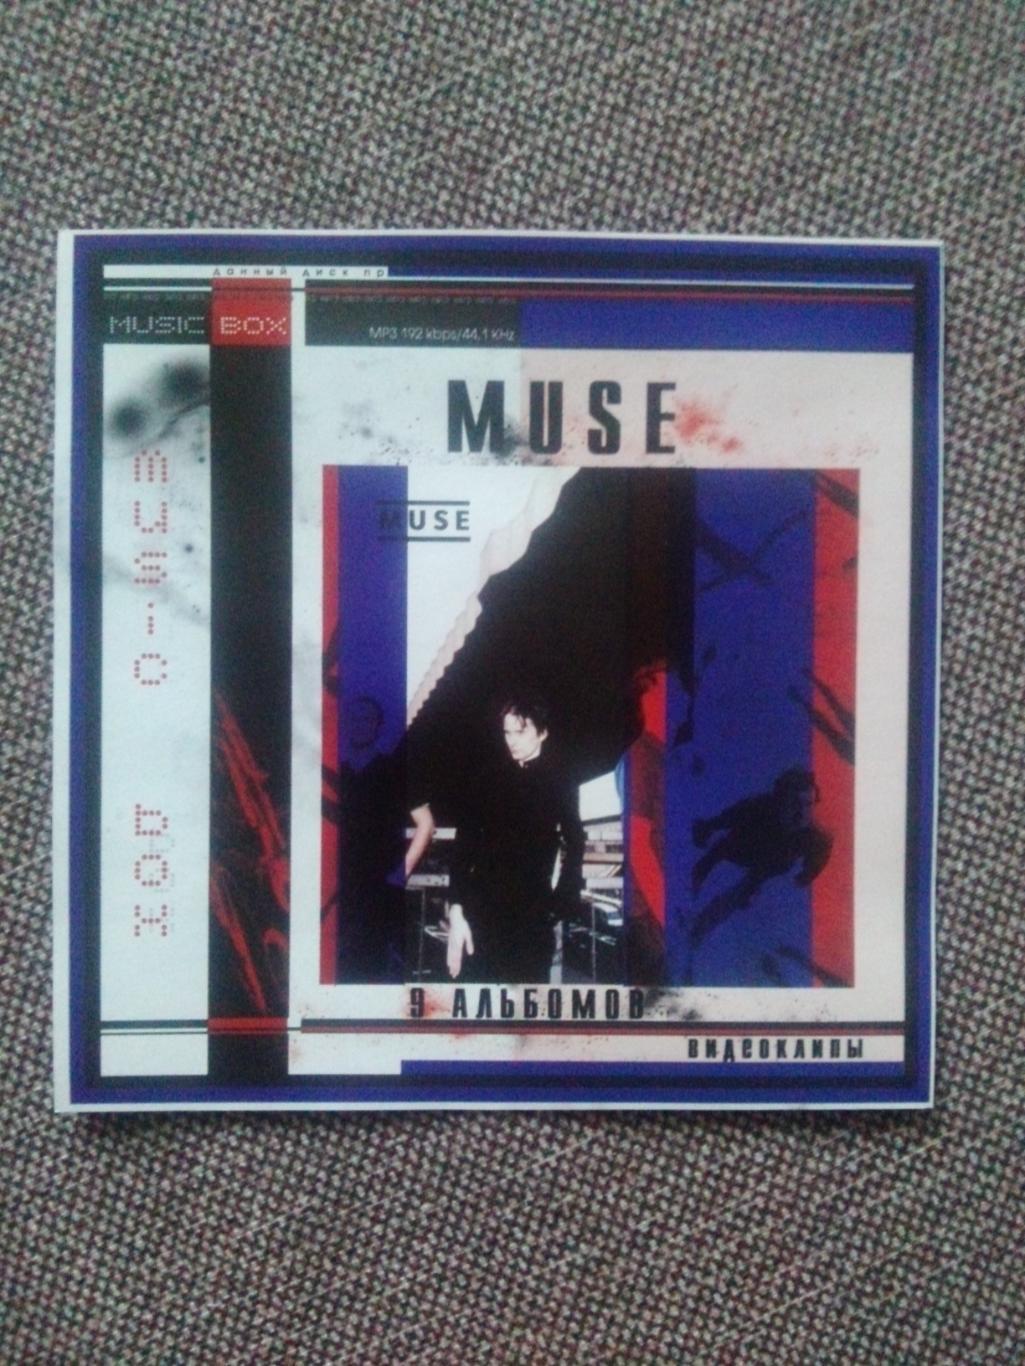 MP - 3 CD : группа Muse 1999 - 2006 гг. ( 6 альбомов) Рок - музыка